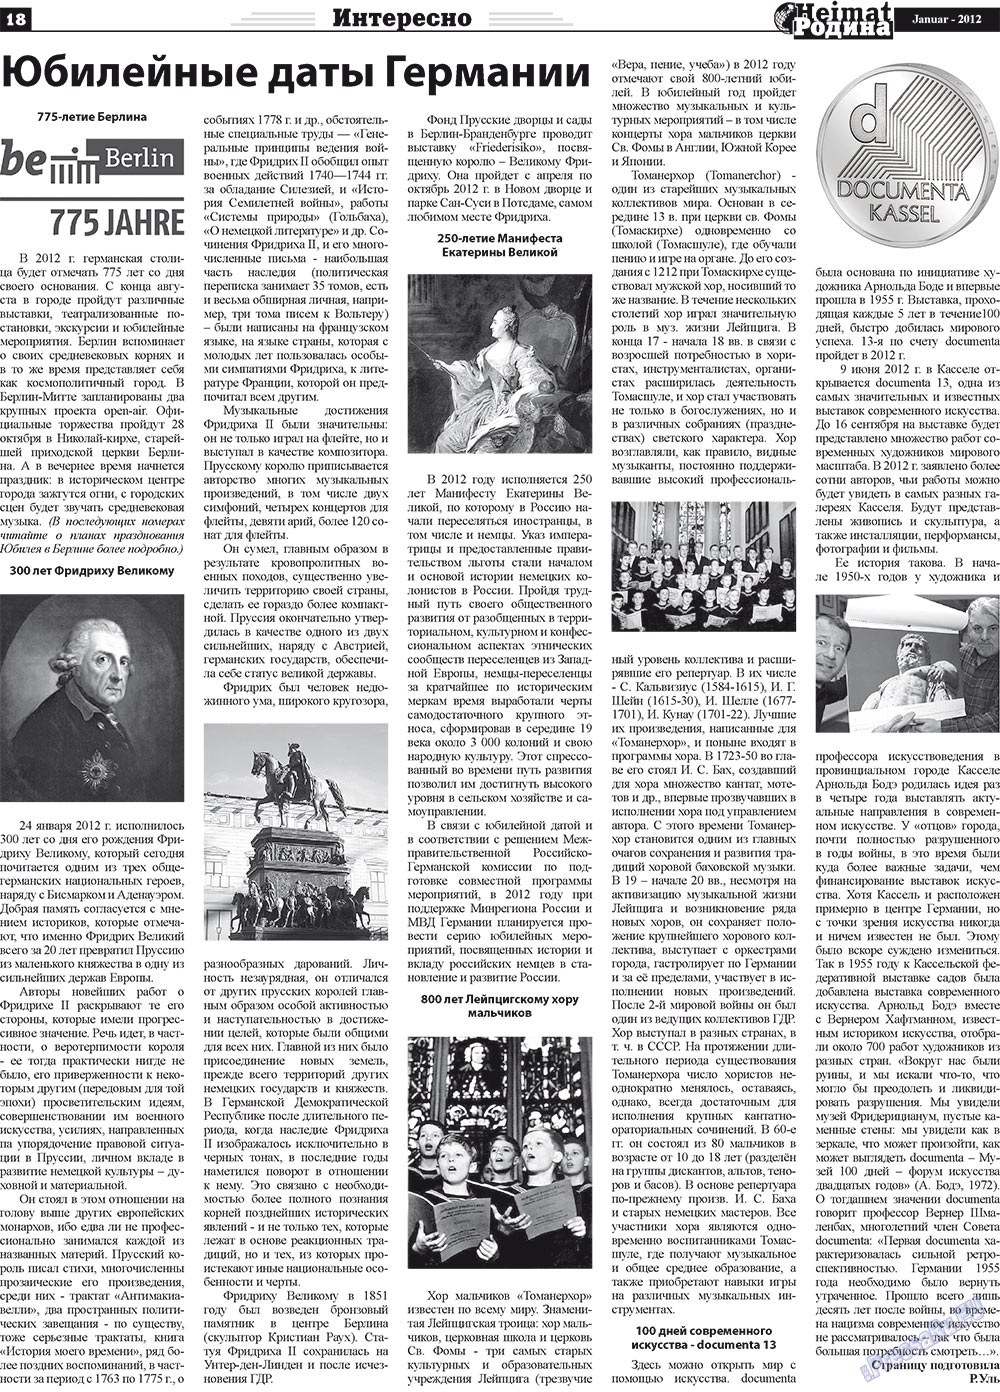 Heimat-Родина, газета. 2012 №1 стр.18